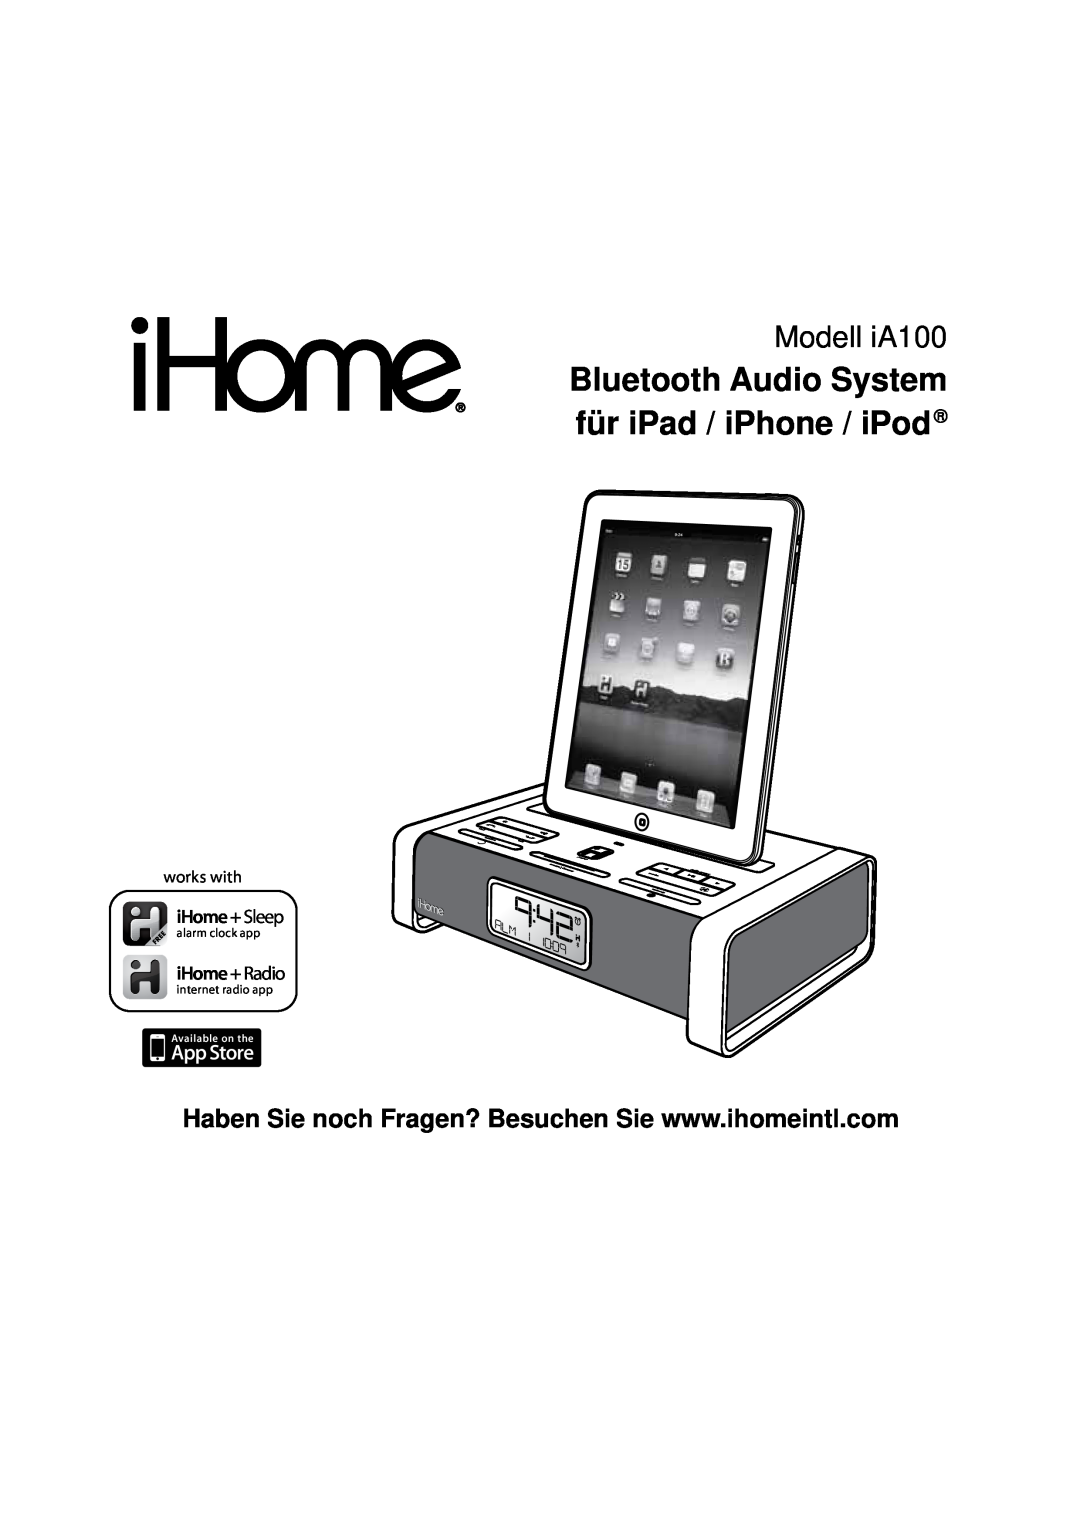 iHome manual Model iA100, Bluetooth Audio System for iPad / iPhone / iPod, iHome + Sleep, iHome + Radio, works with 